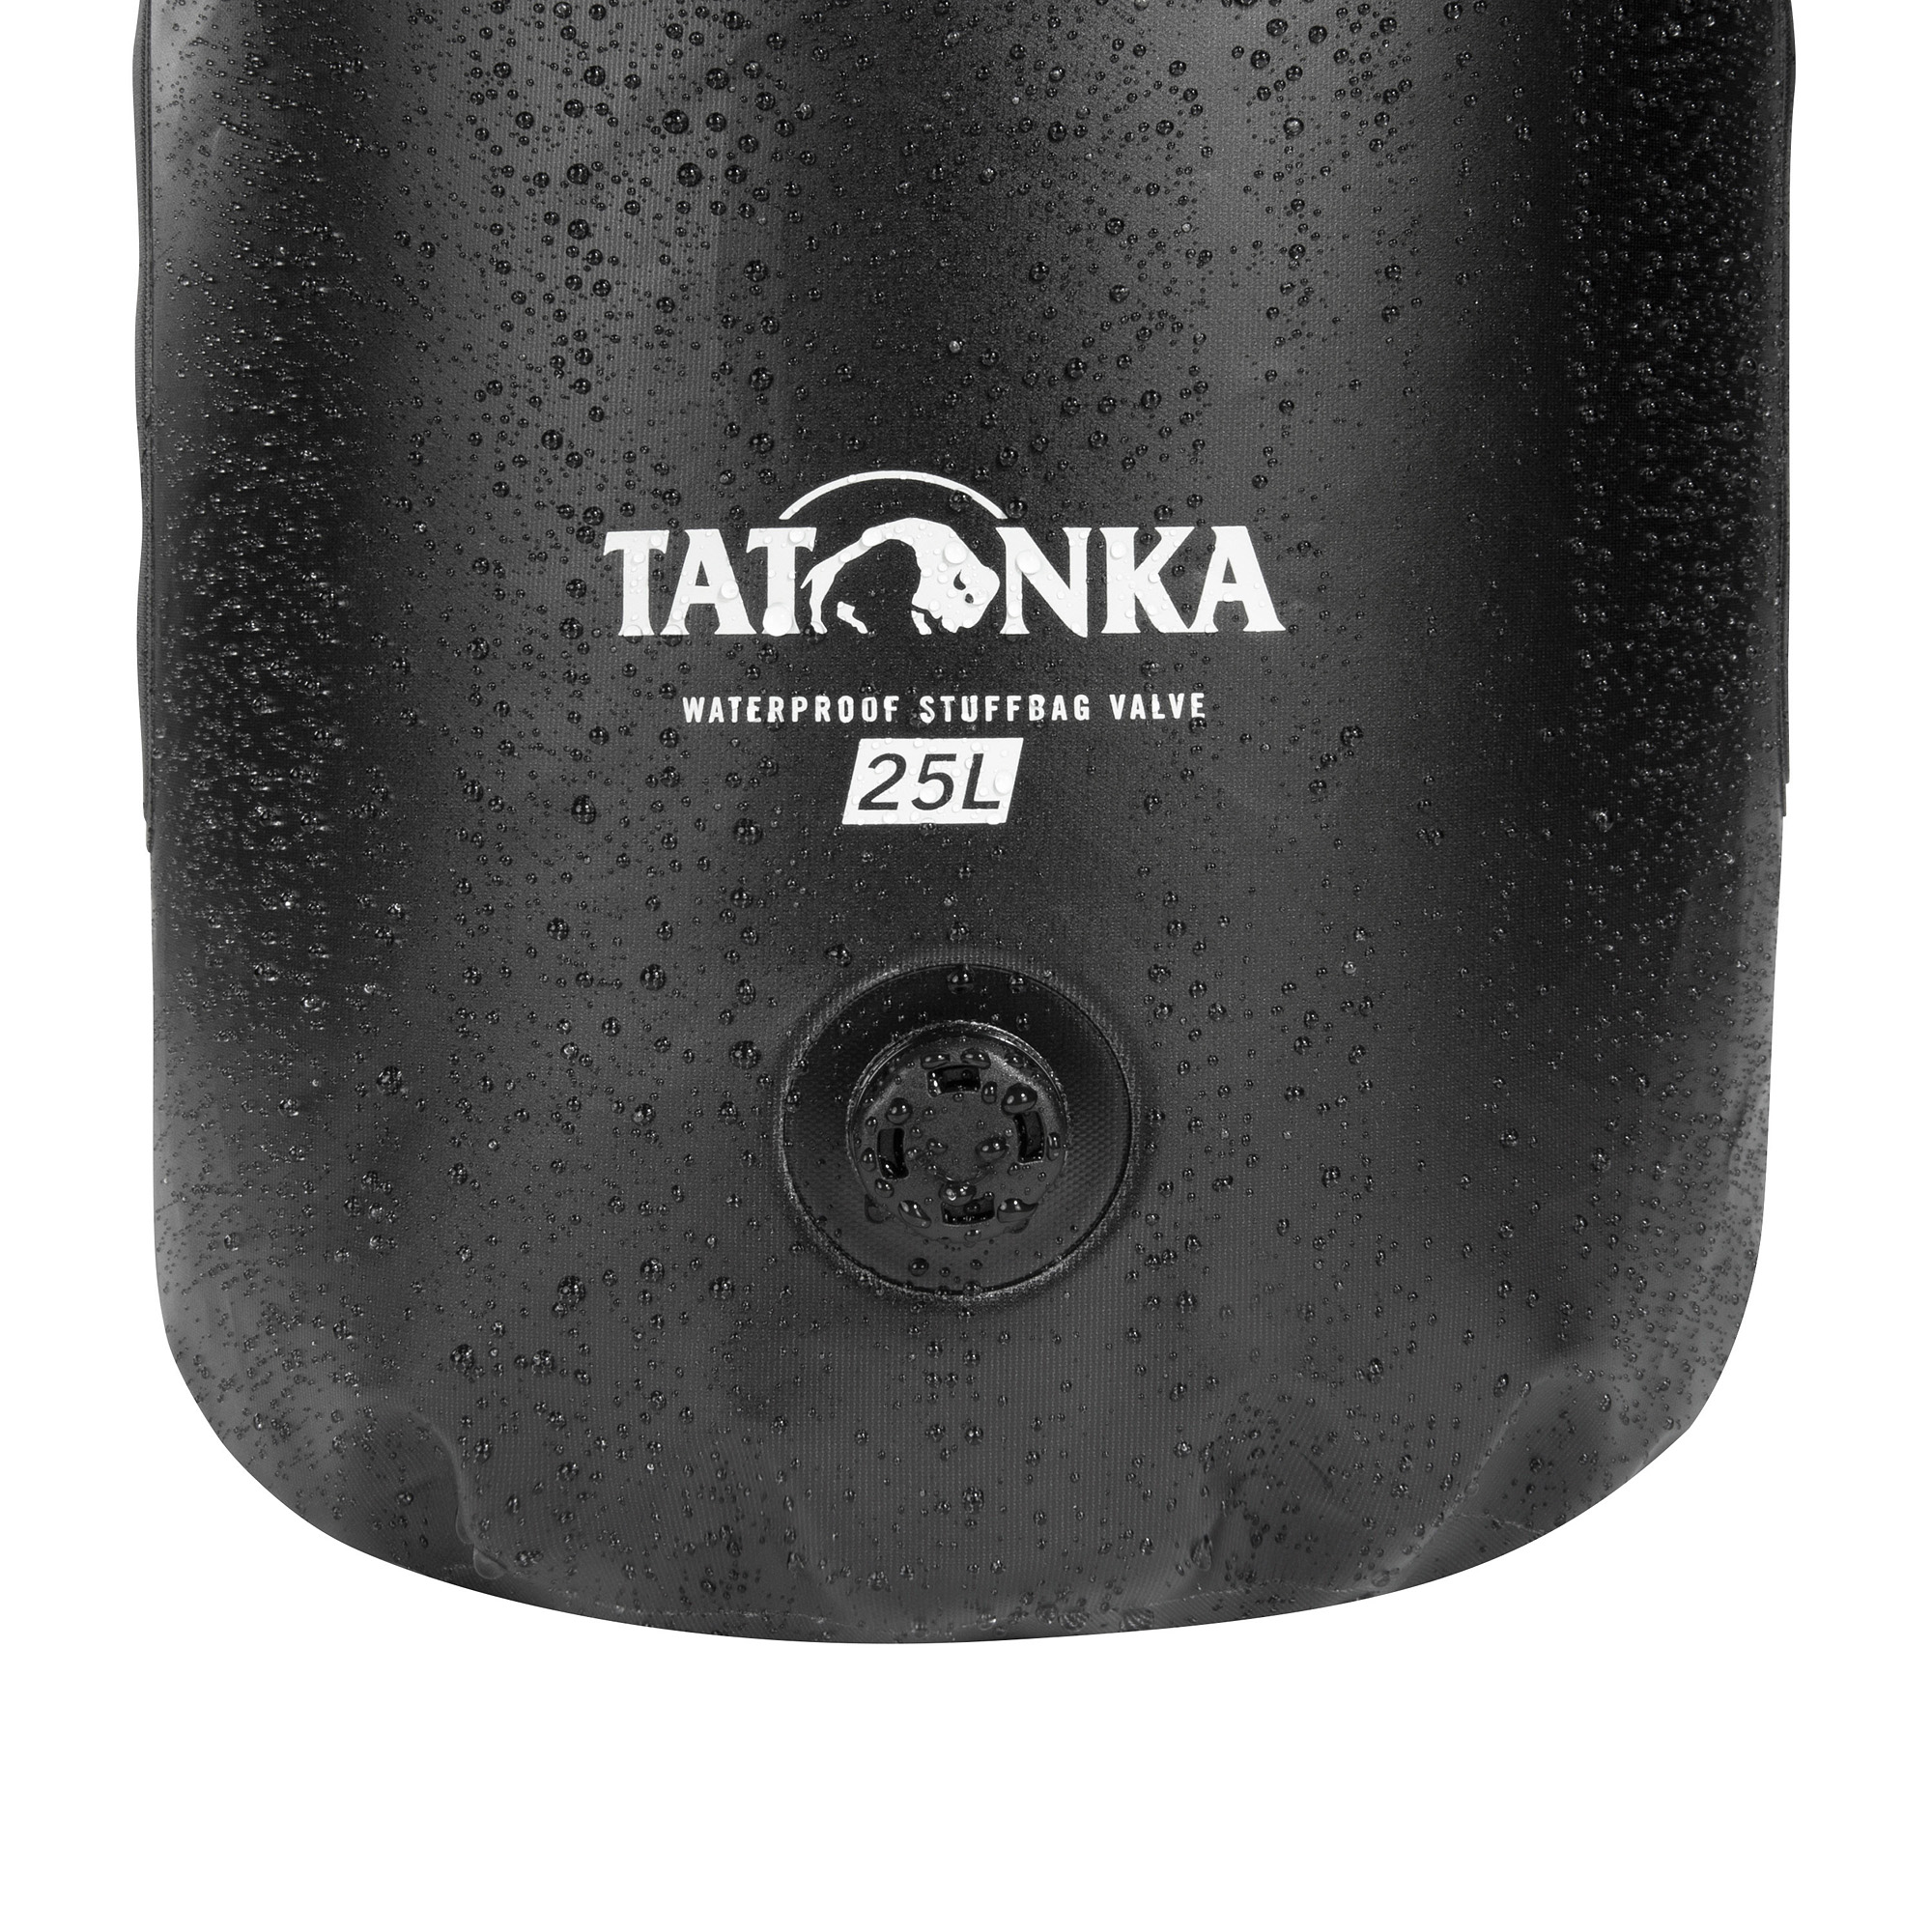 Tatonka WP Stuffbag Valve 25l black schwarz Reisezubehör 4013236393620